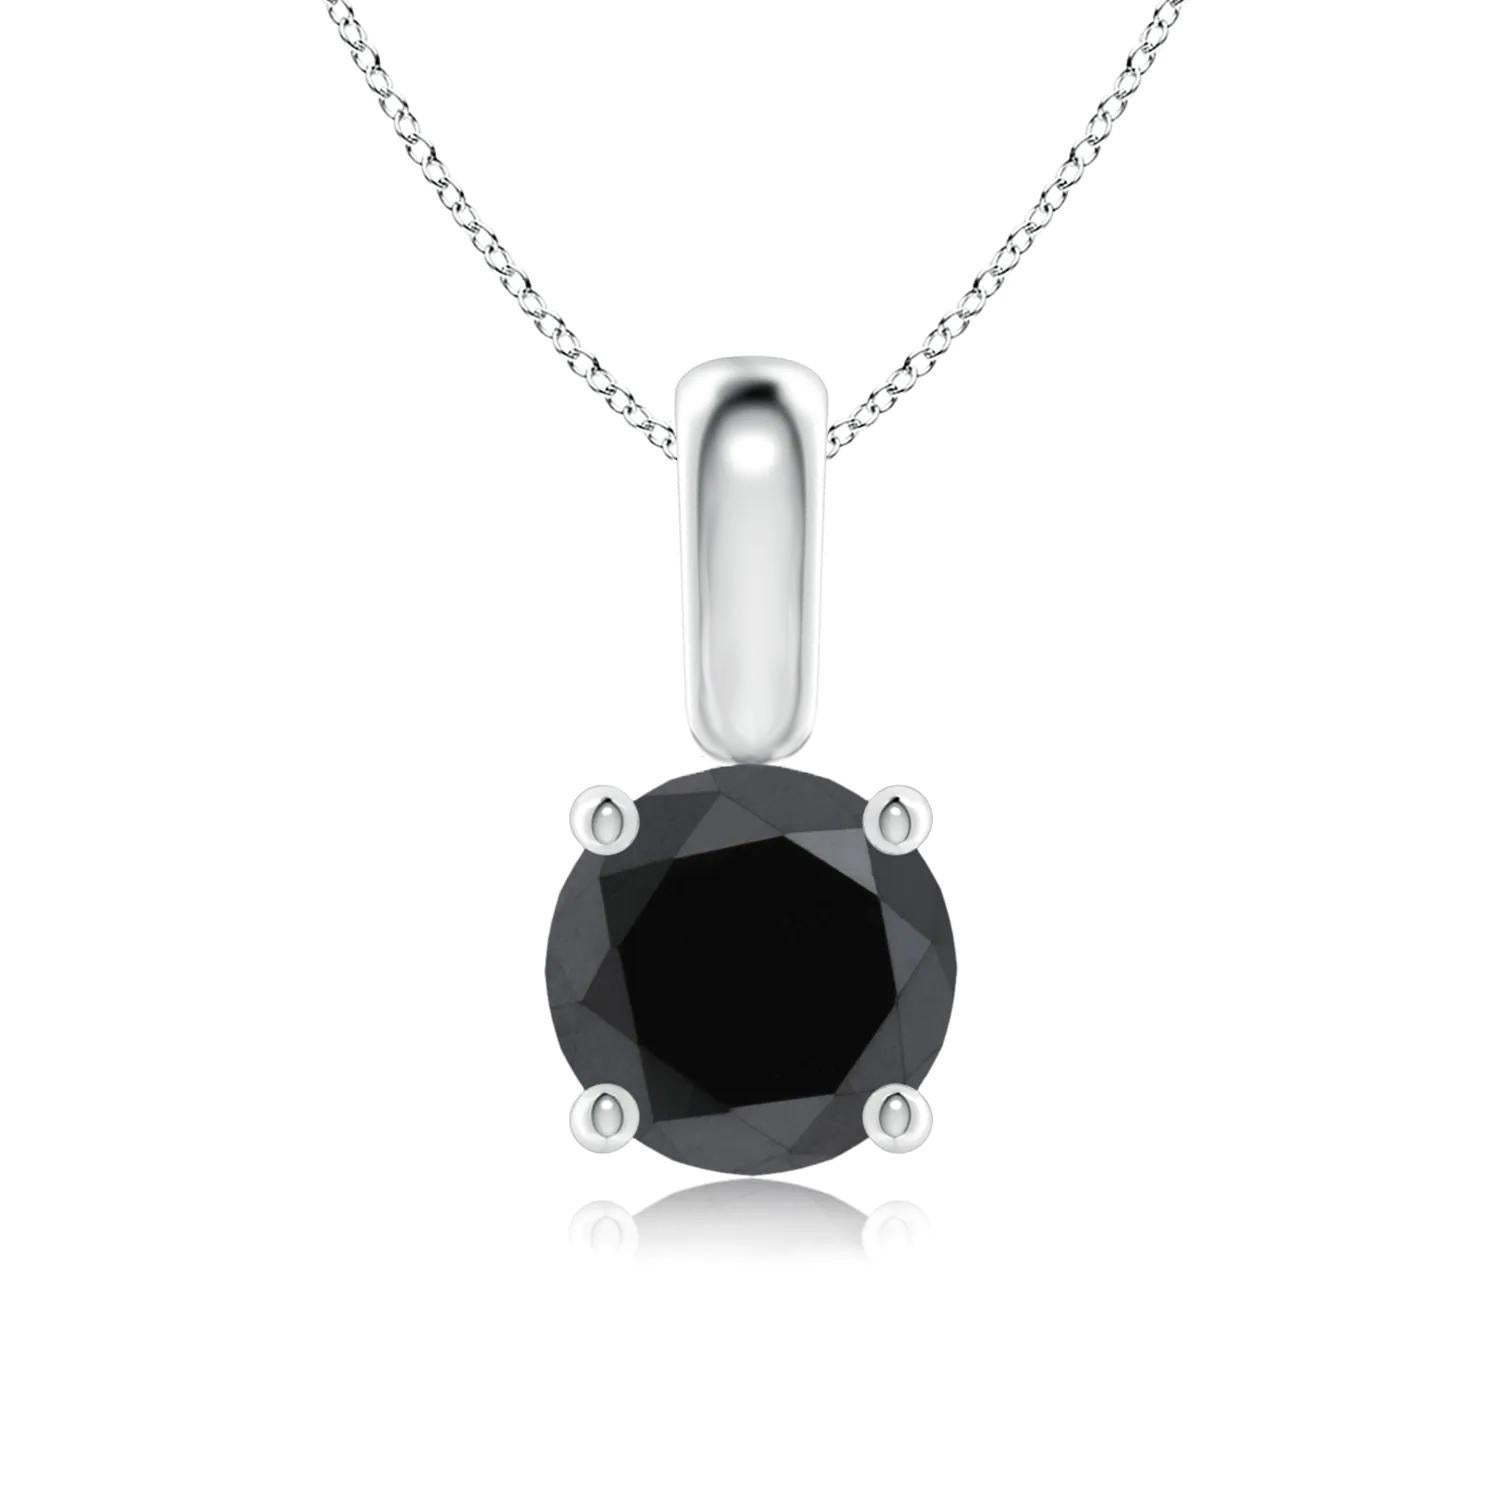 Contemporary 1.64 Carat Round Black Diamond Solitaire Pendant Necklace in 14K White Gold